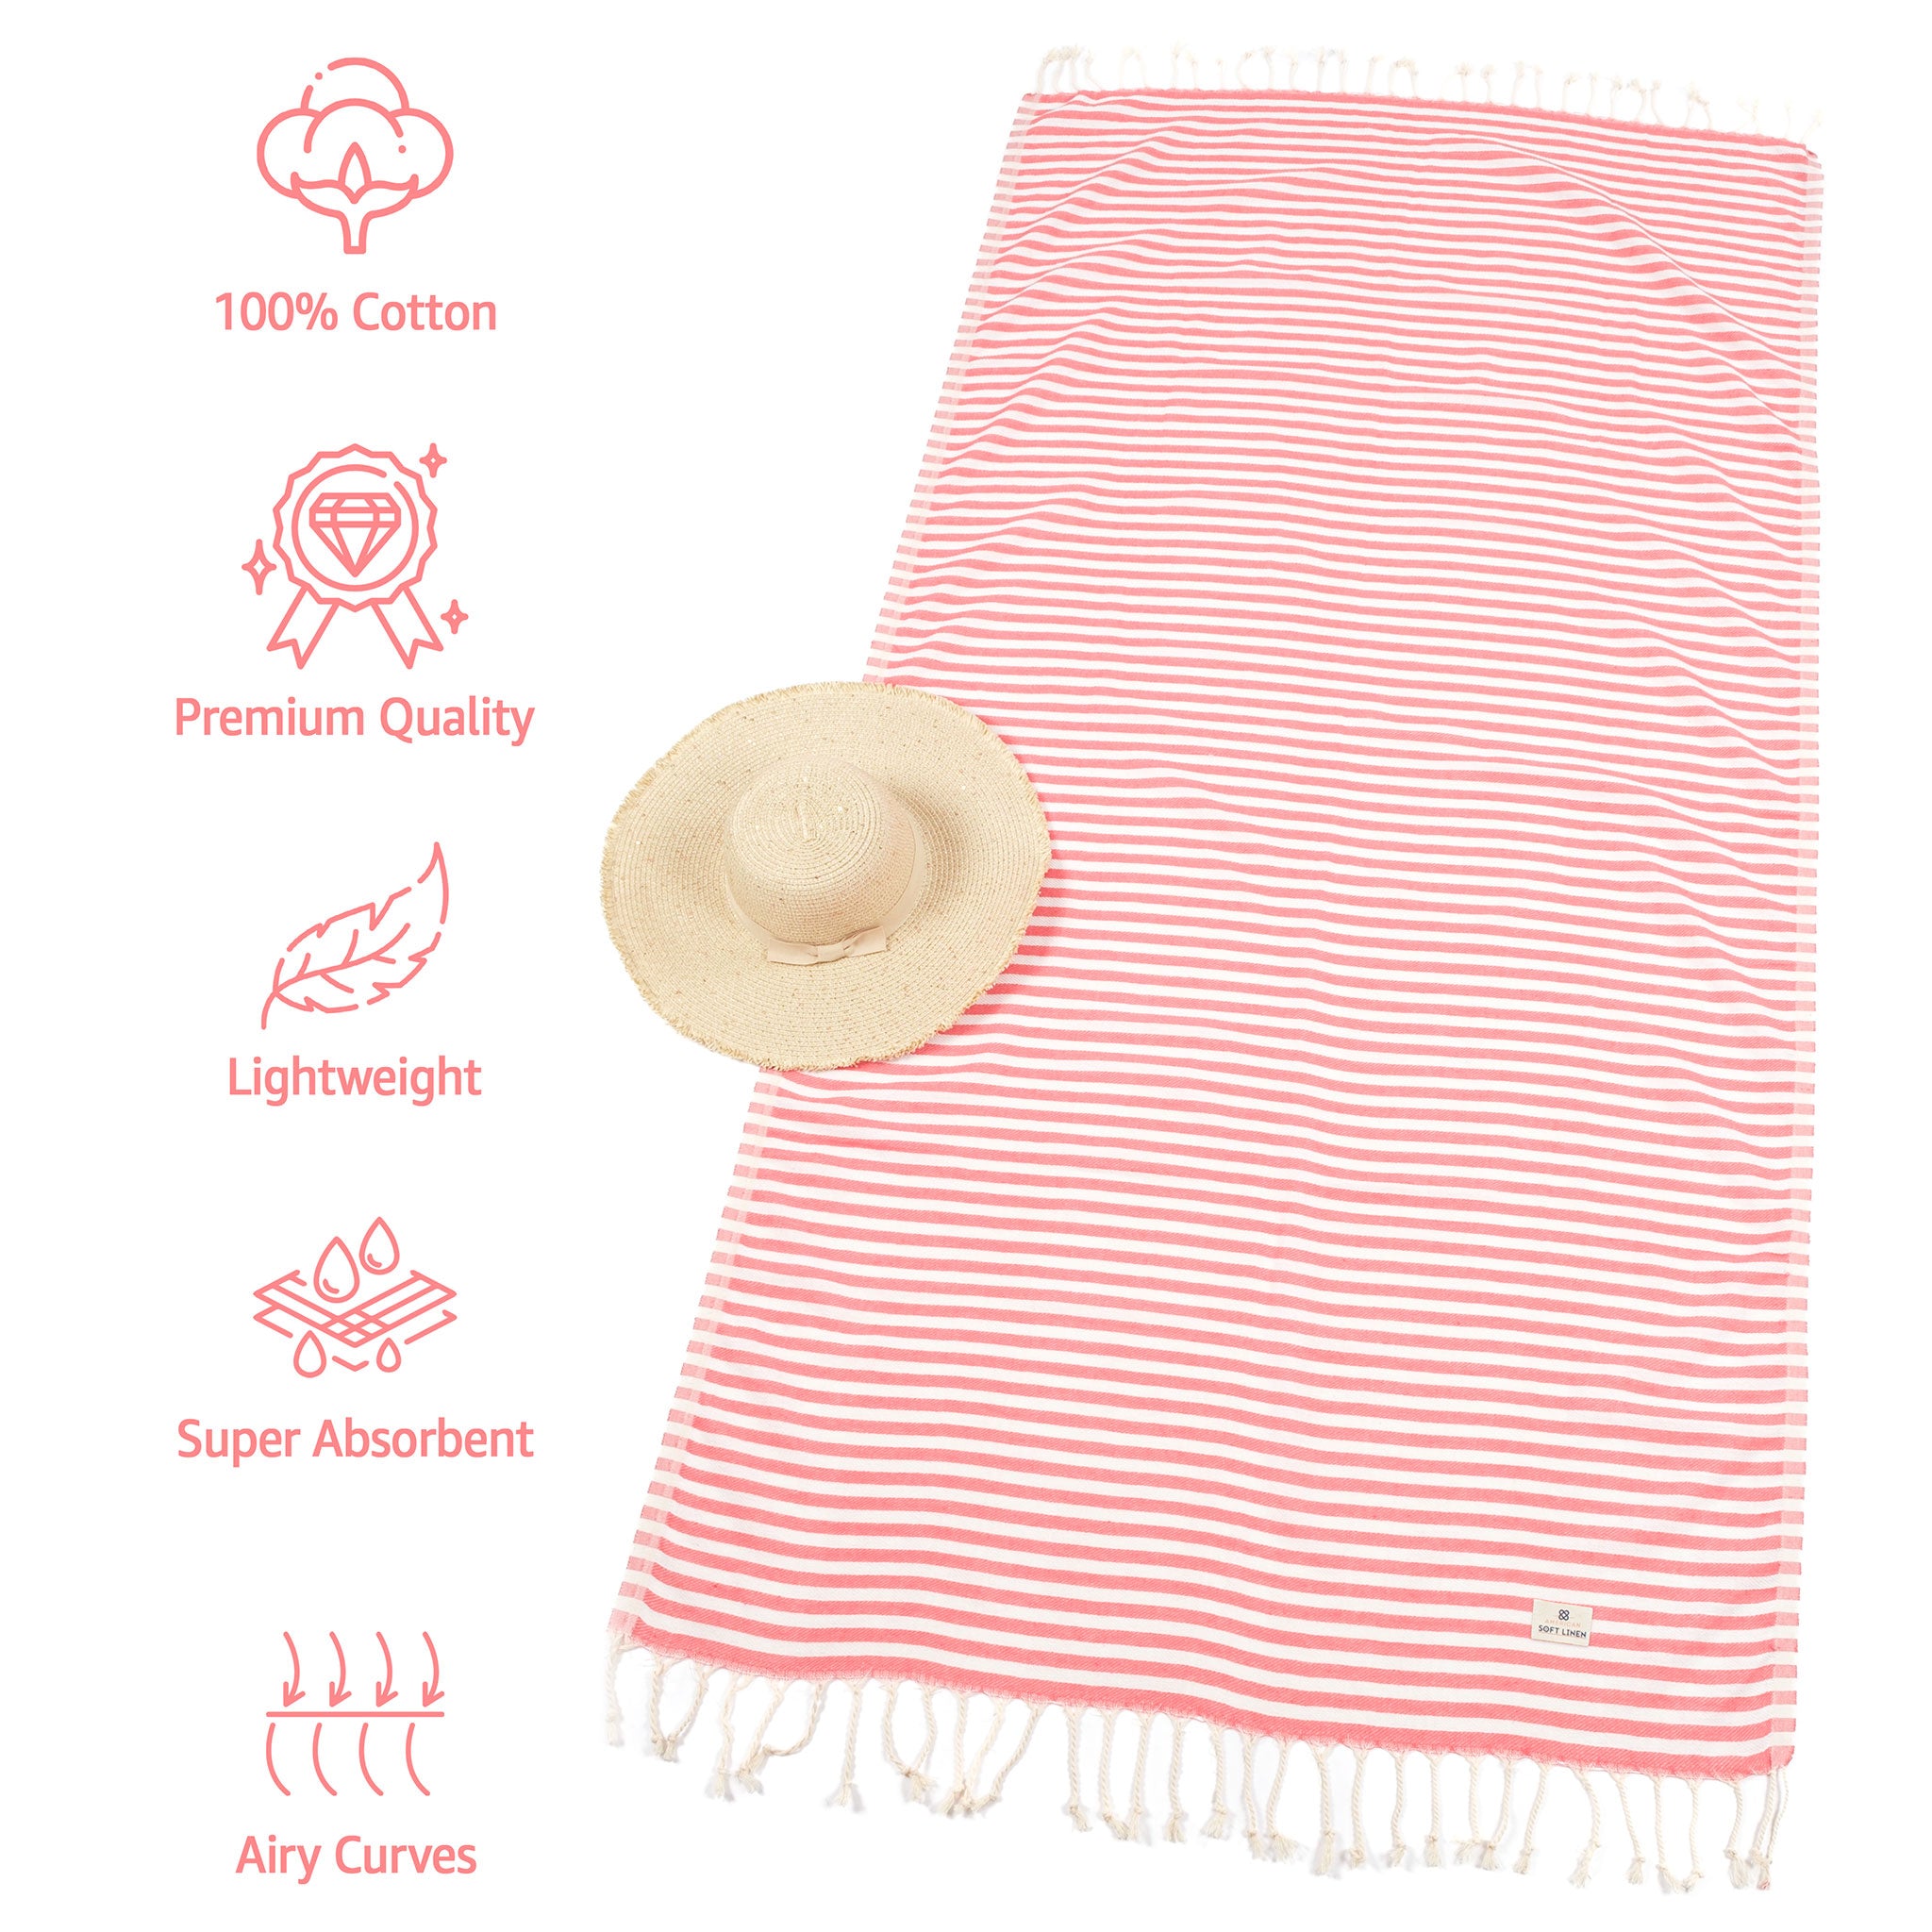 American Soft Linen - 100% Cotton Turkish Peshtemal Towels 40x70 Inches - Coral-Stripe - 3